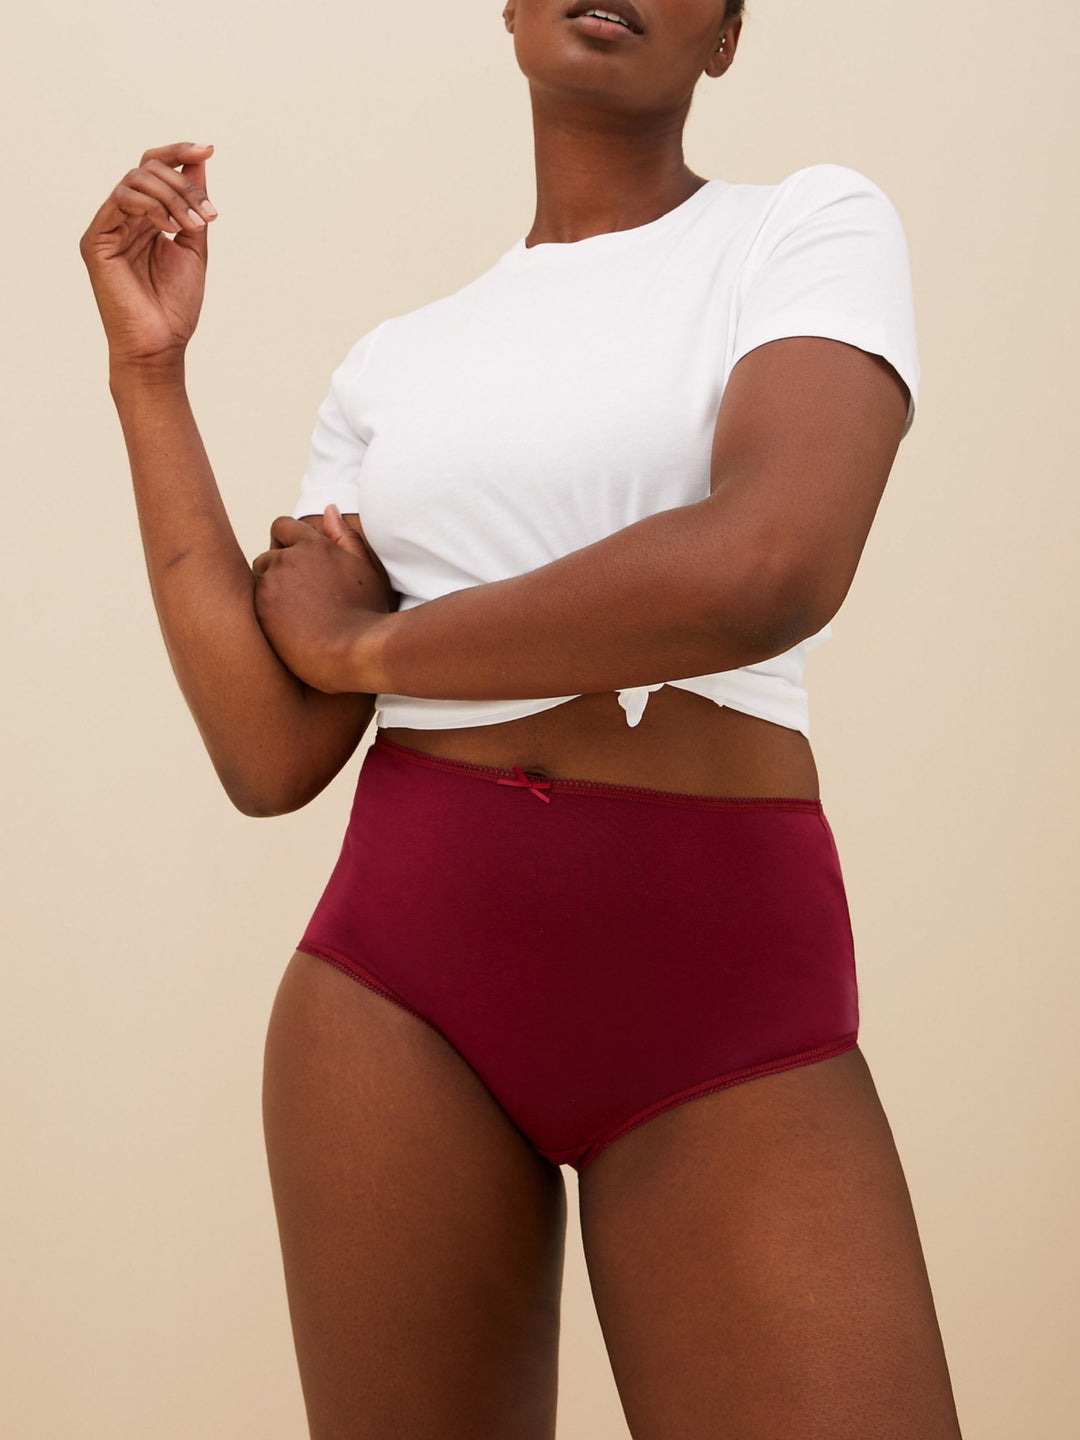 voenxe Women Bikini Underwear,Seamless Breathable Uganda